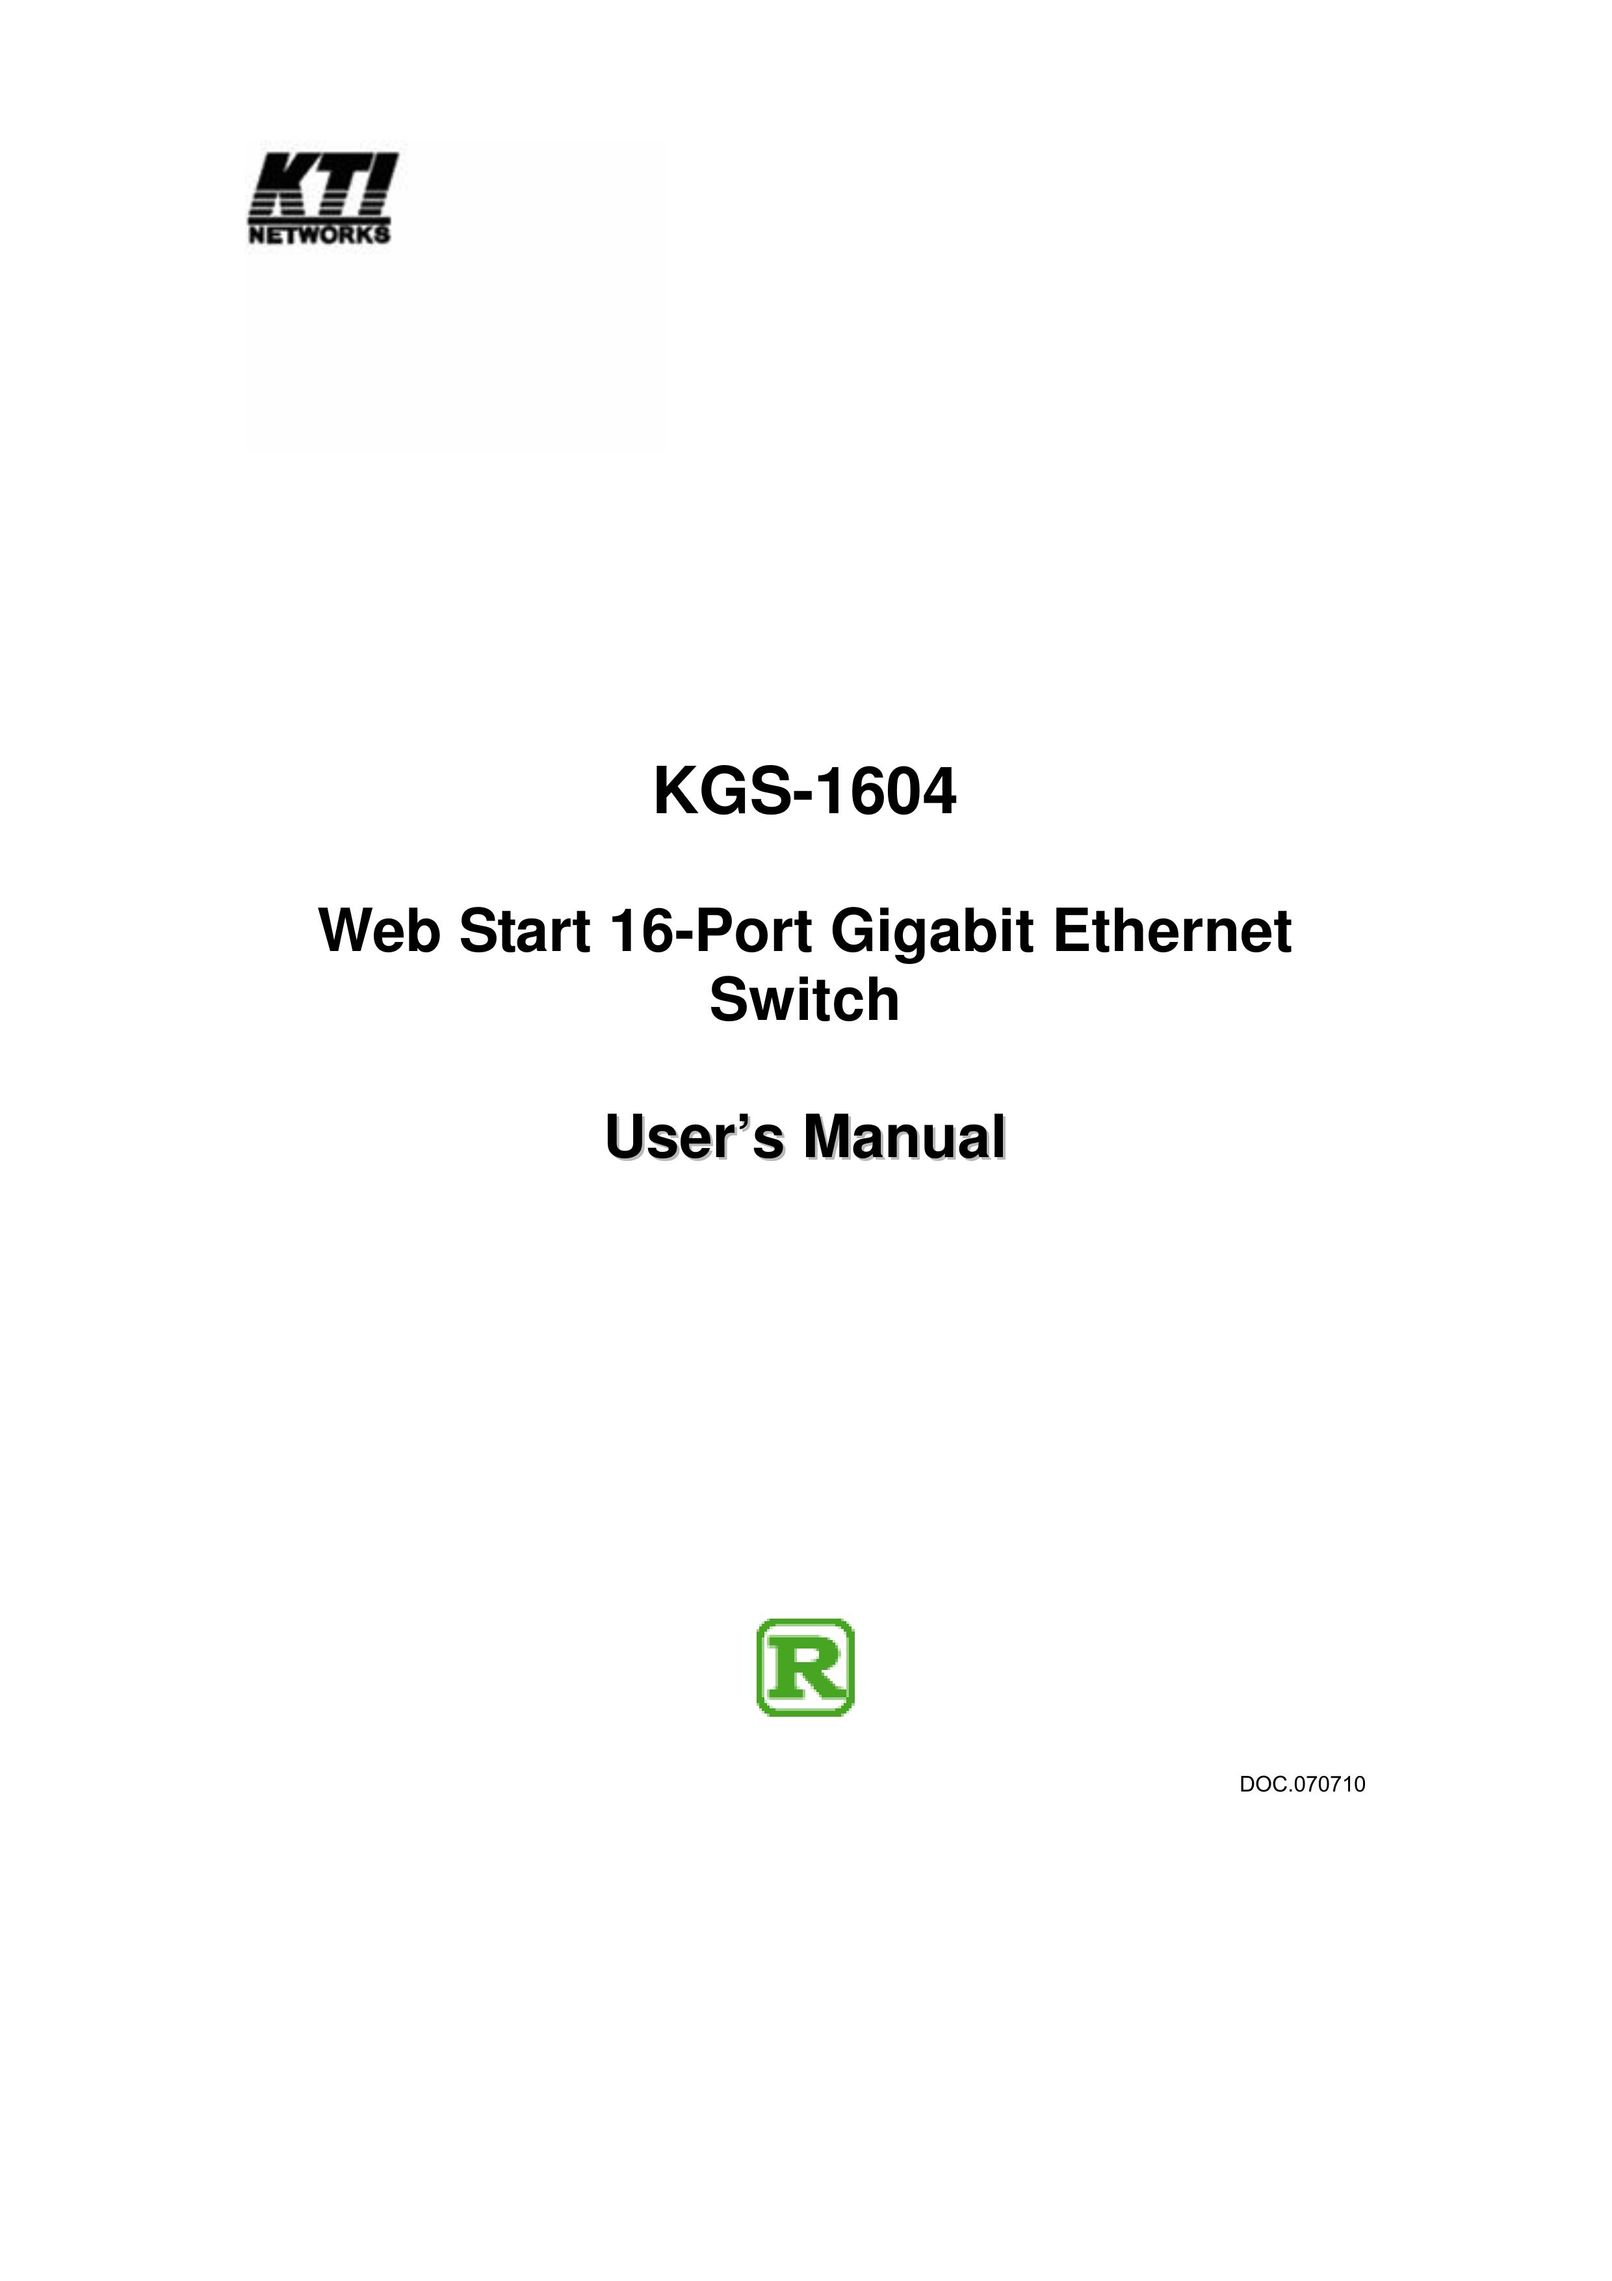 KTI Networks KGS-2404 Switch User Manual